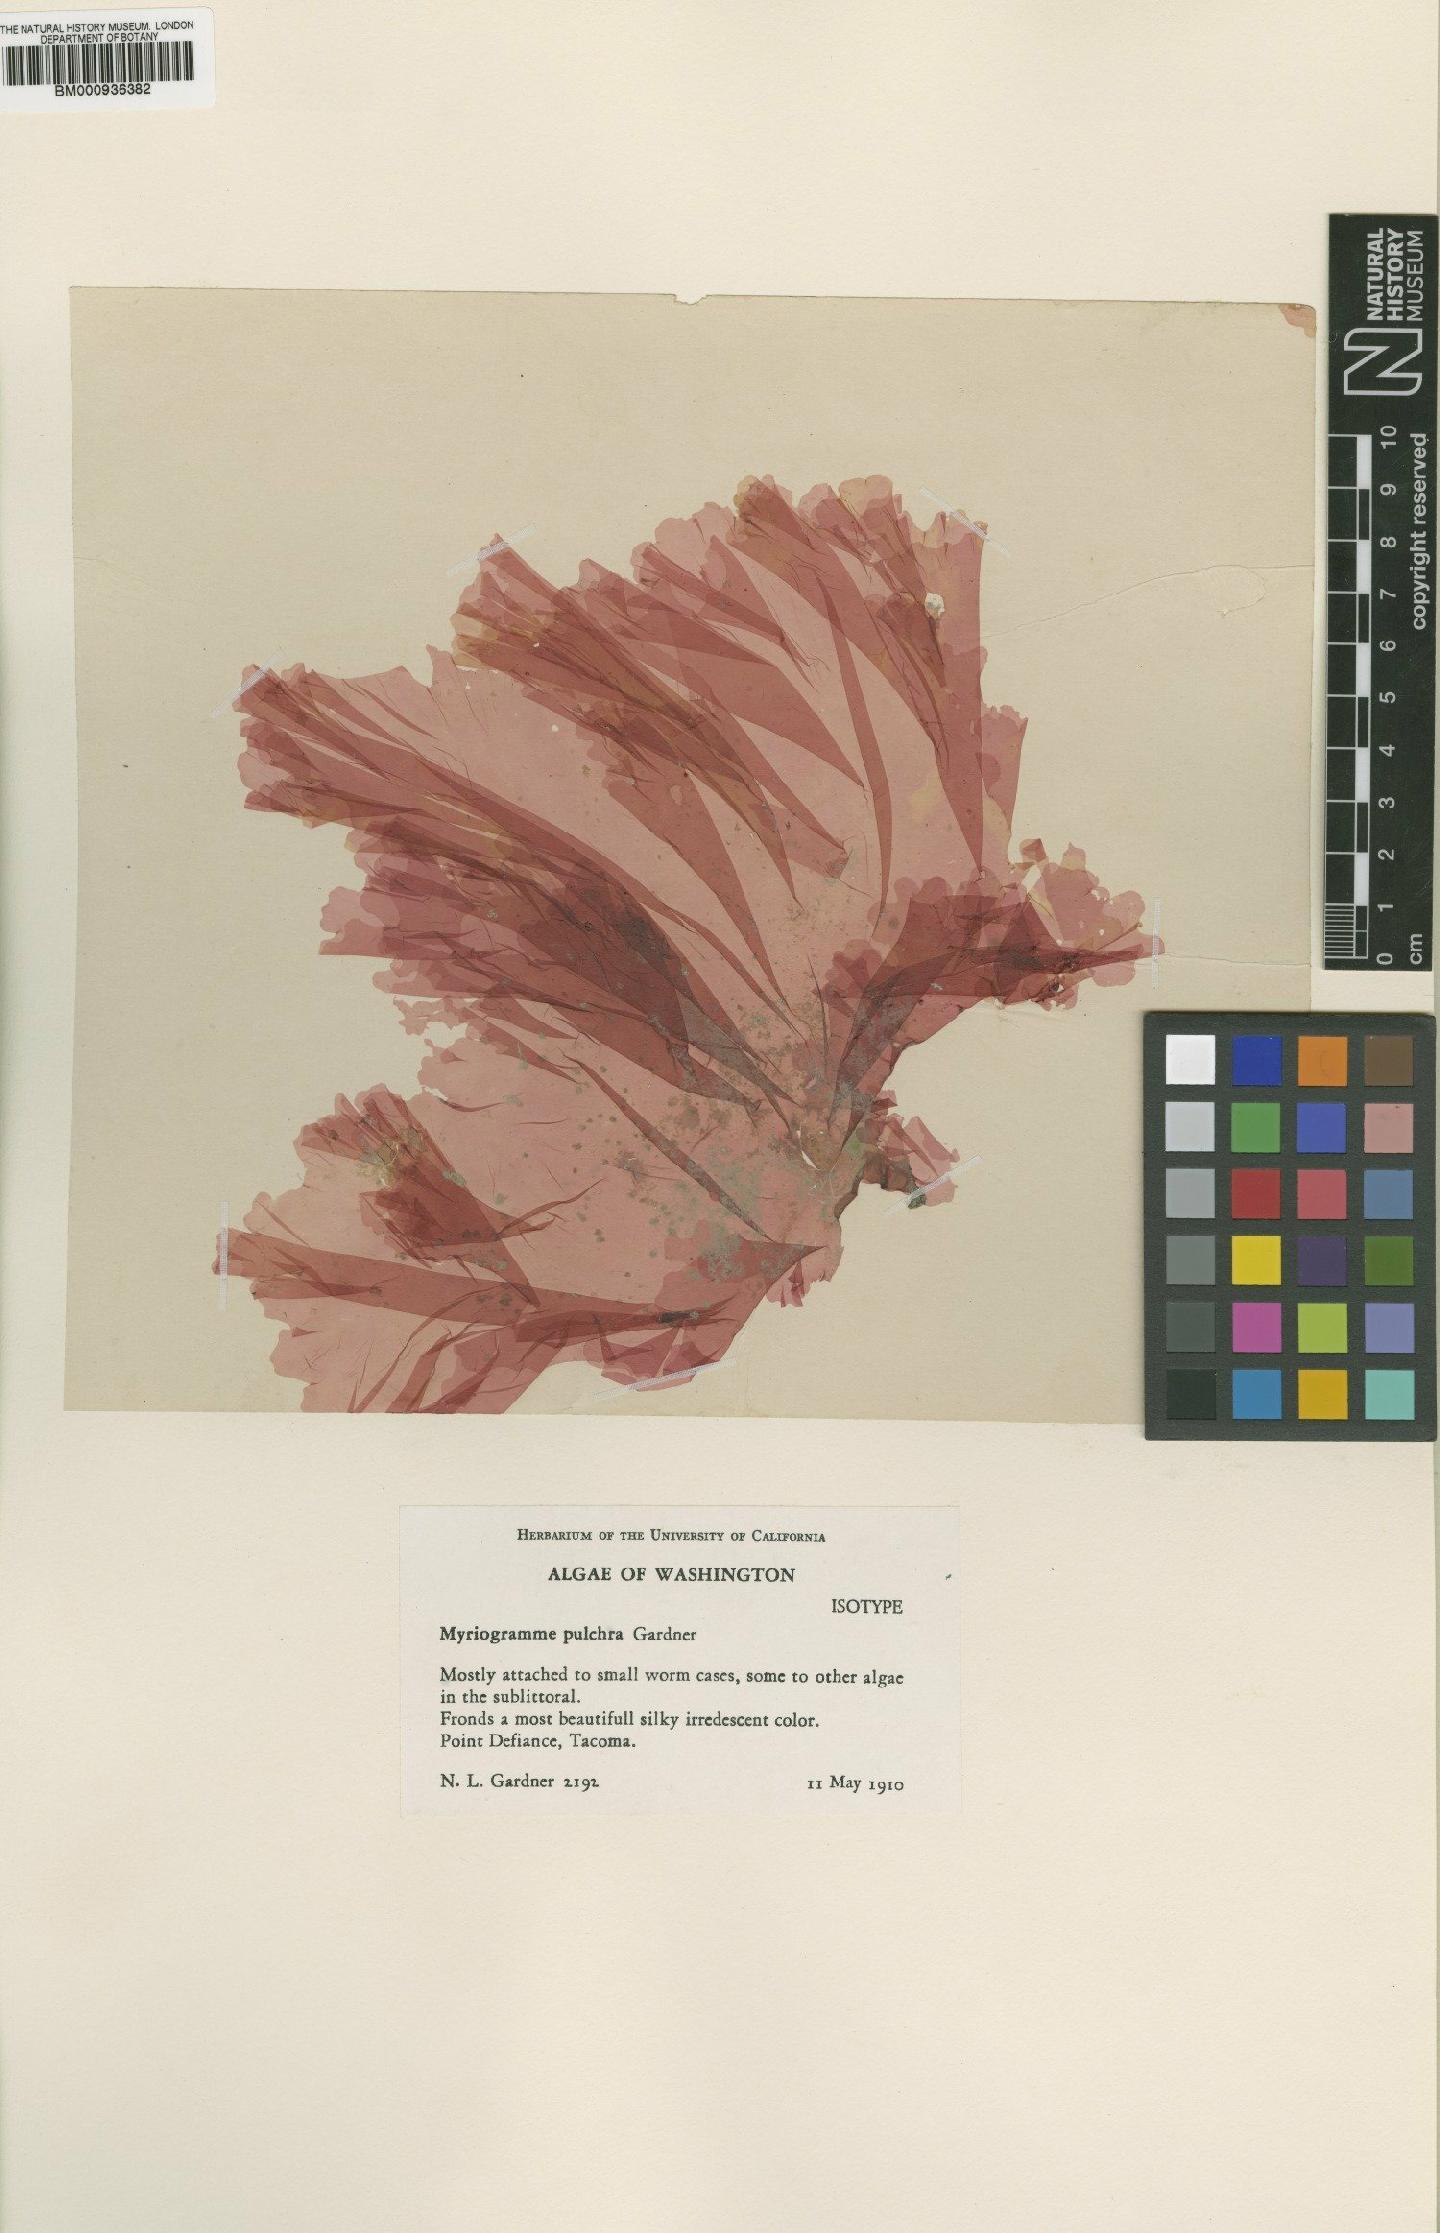 To NHMUK collection (Myriogramme pulchra N.L.Gardner; Syntype; NHMUK:ecatalogue:439760)